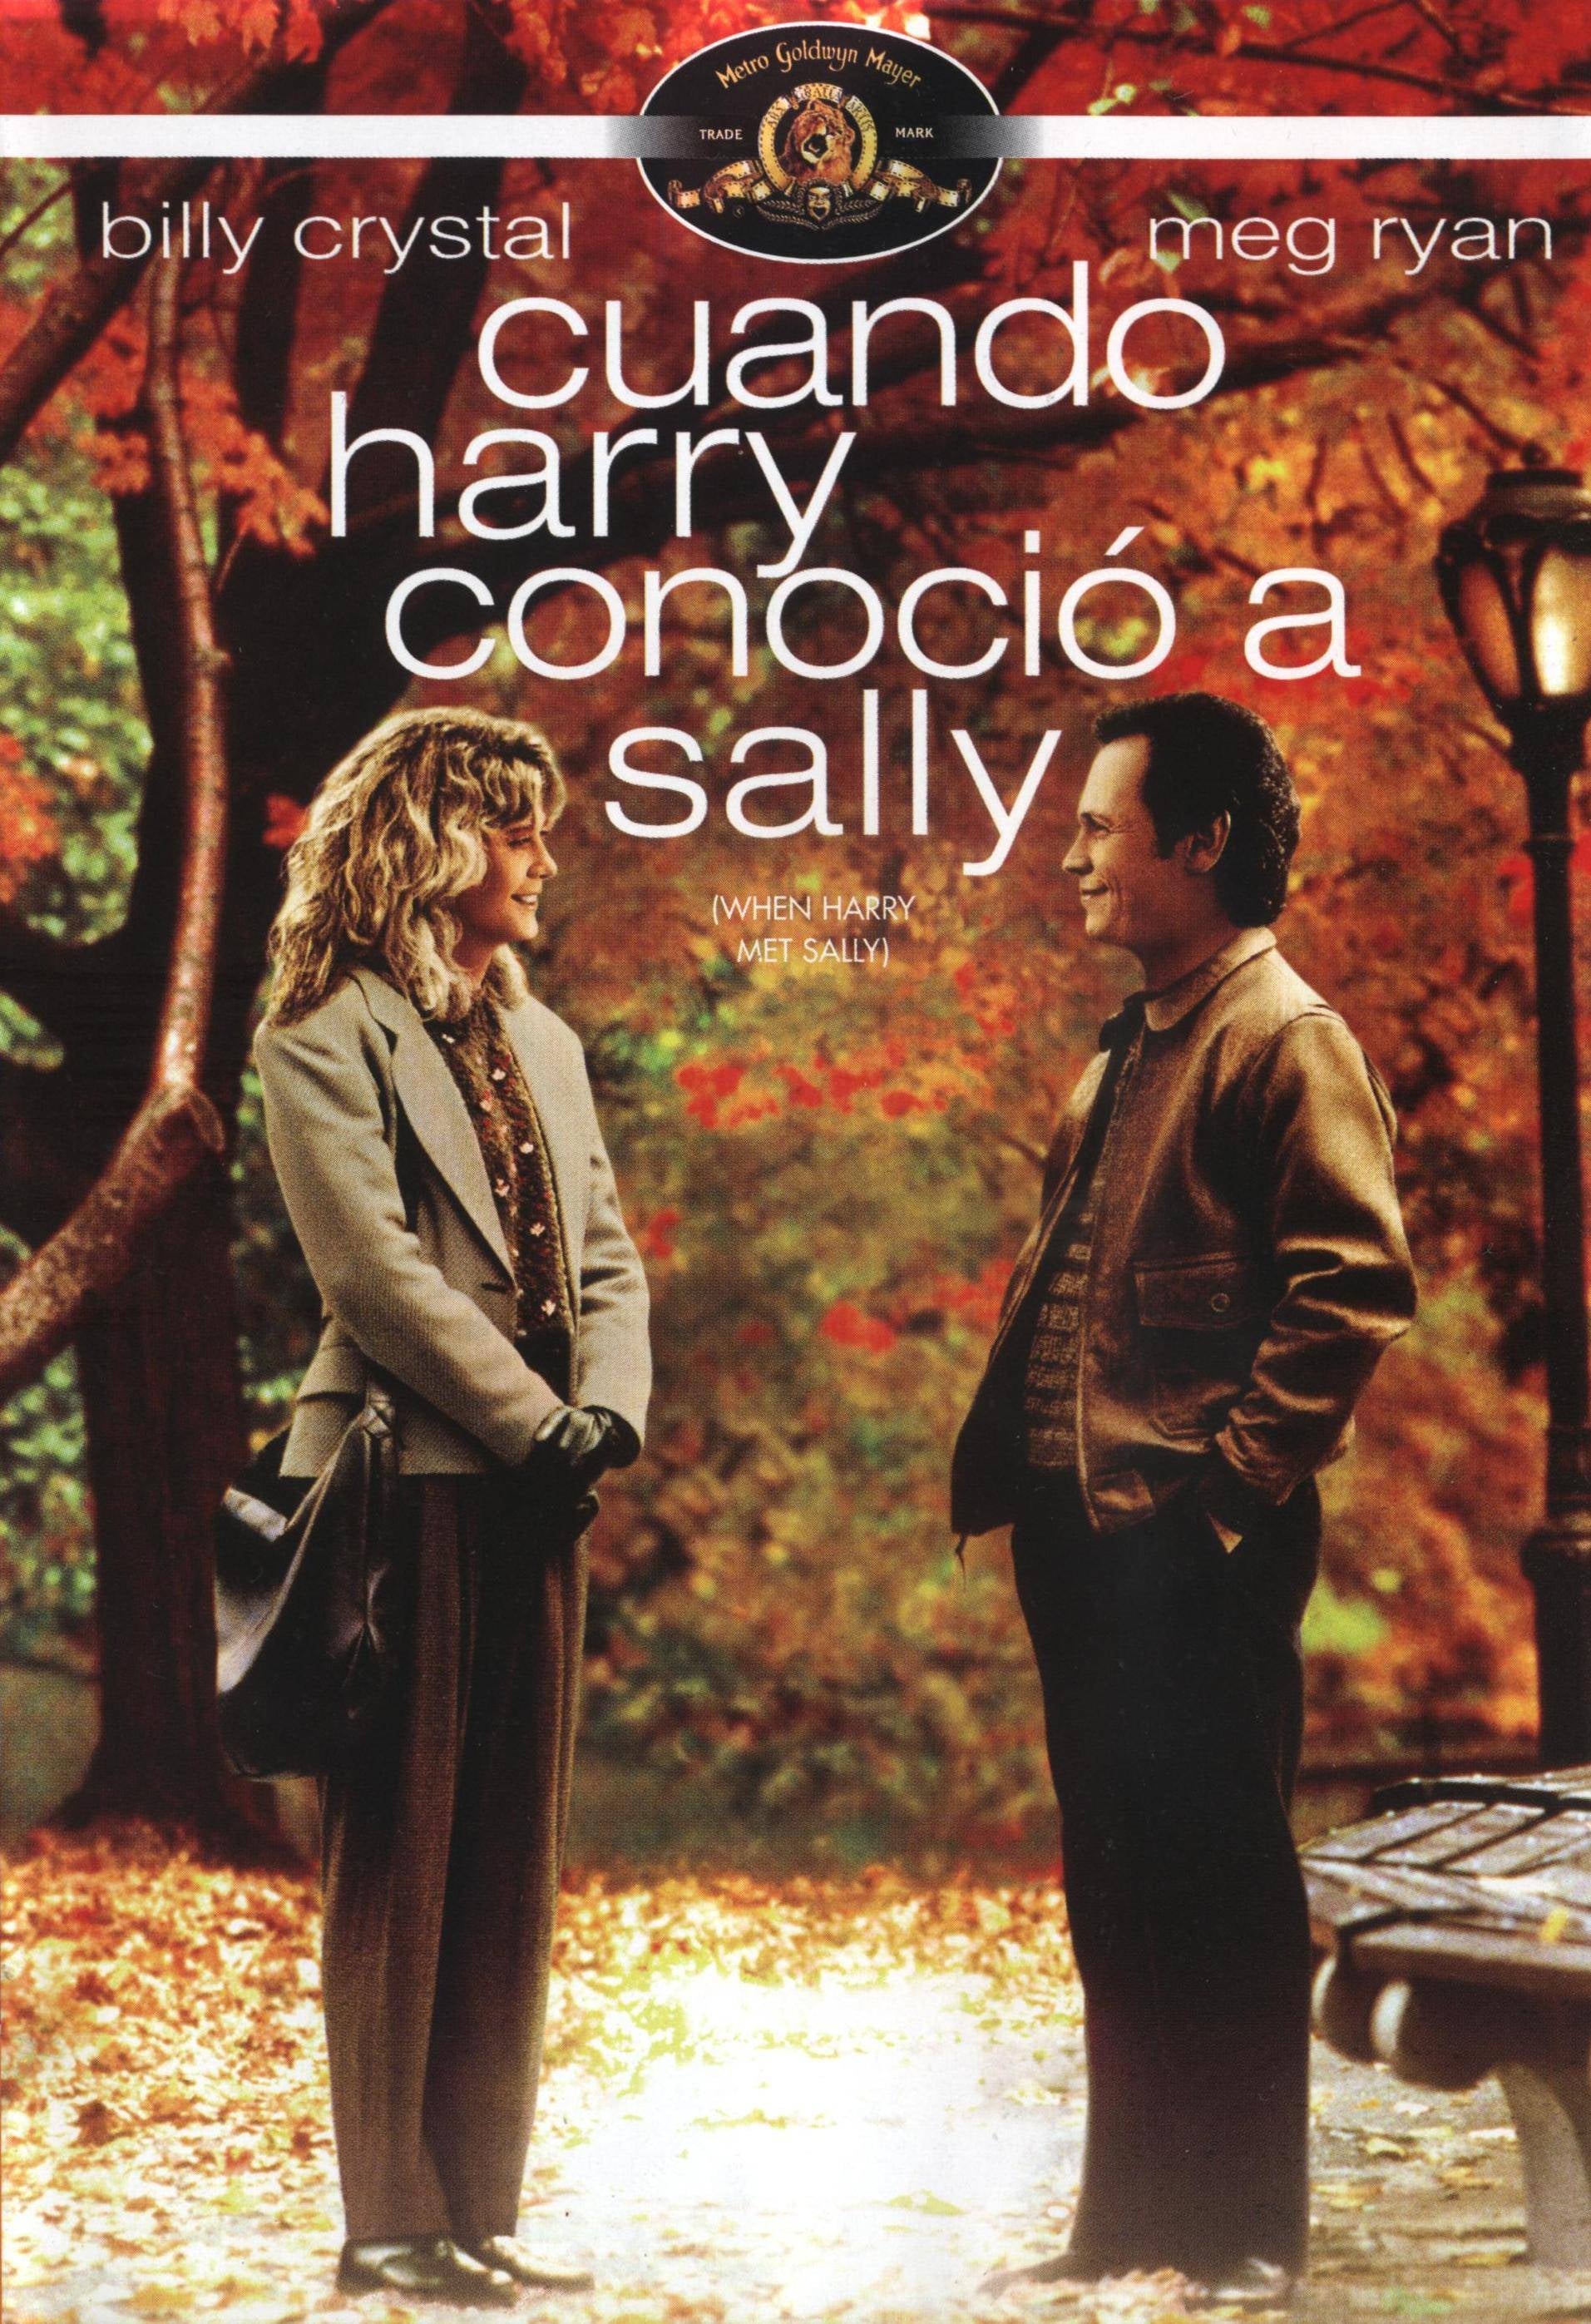 Watch When Harry Met Sally... (1989) Full Movie Online Free - CineFOX